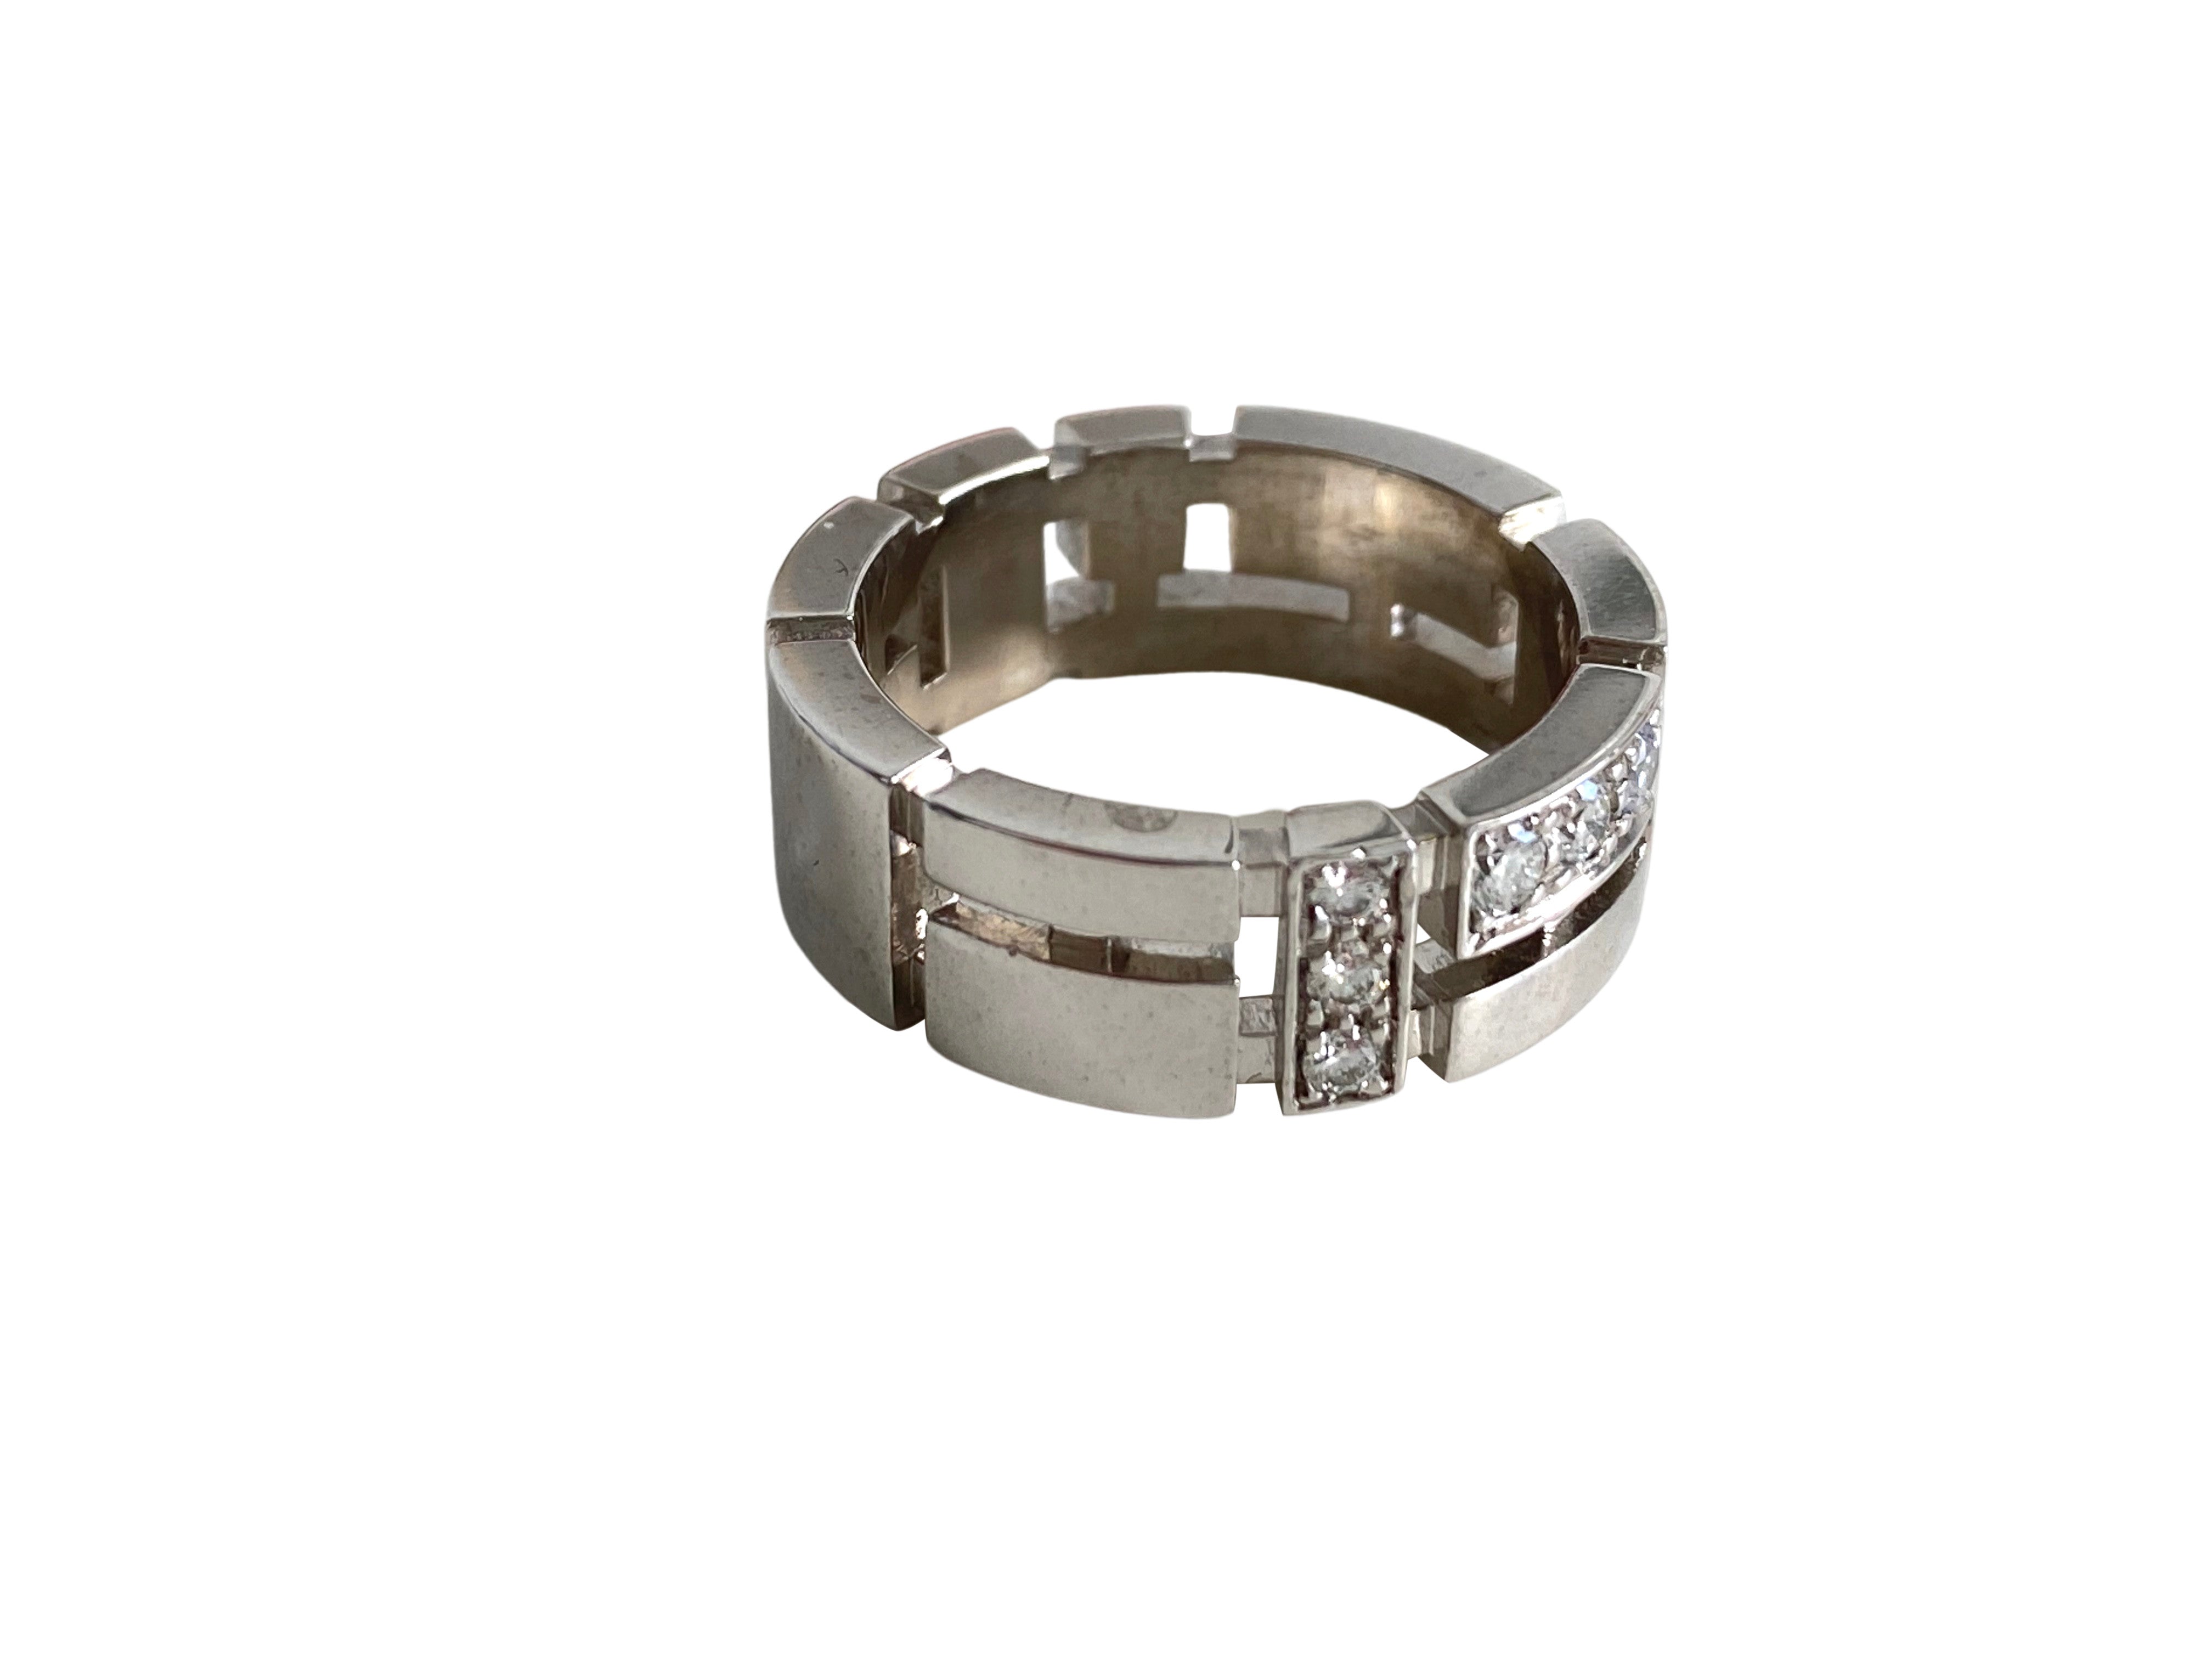 Diamond 'Cubism' Band Ring, Canturi